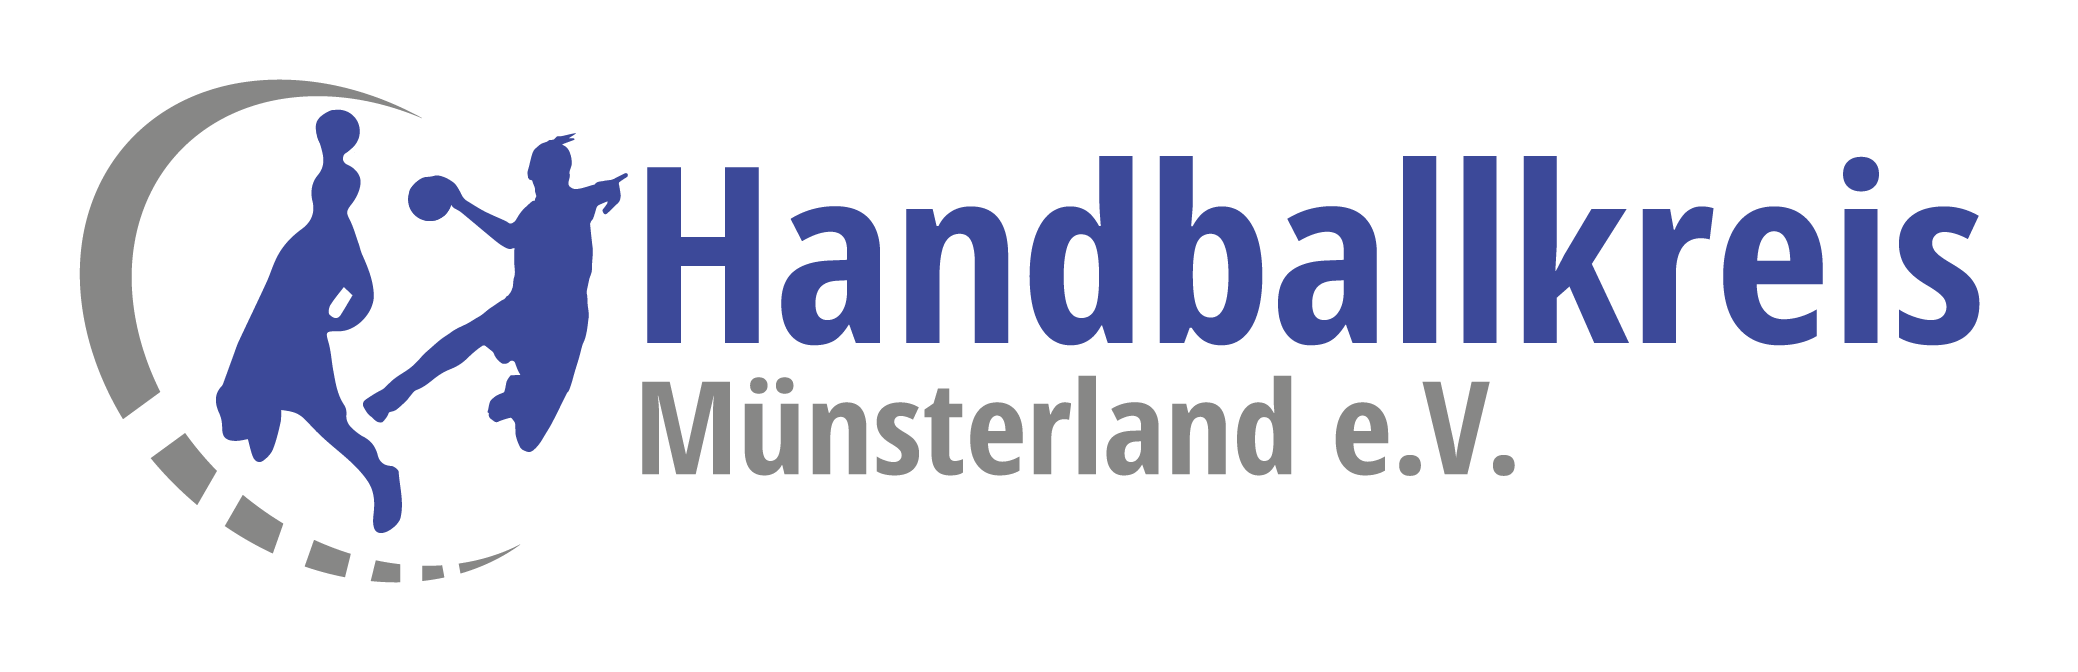 Handballkreis Münsterland logo